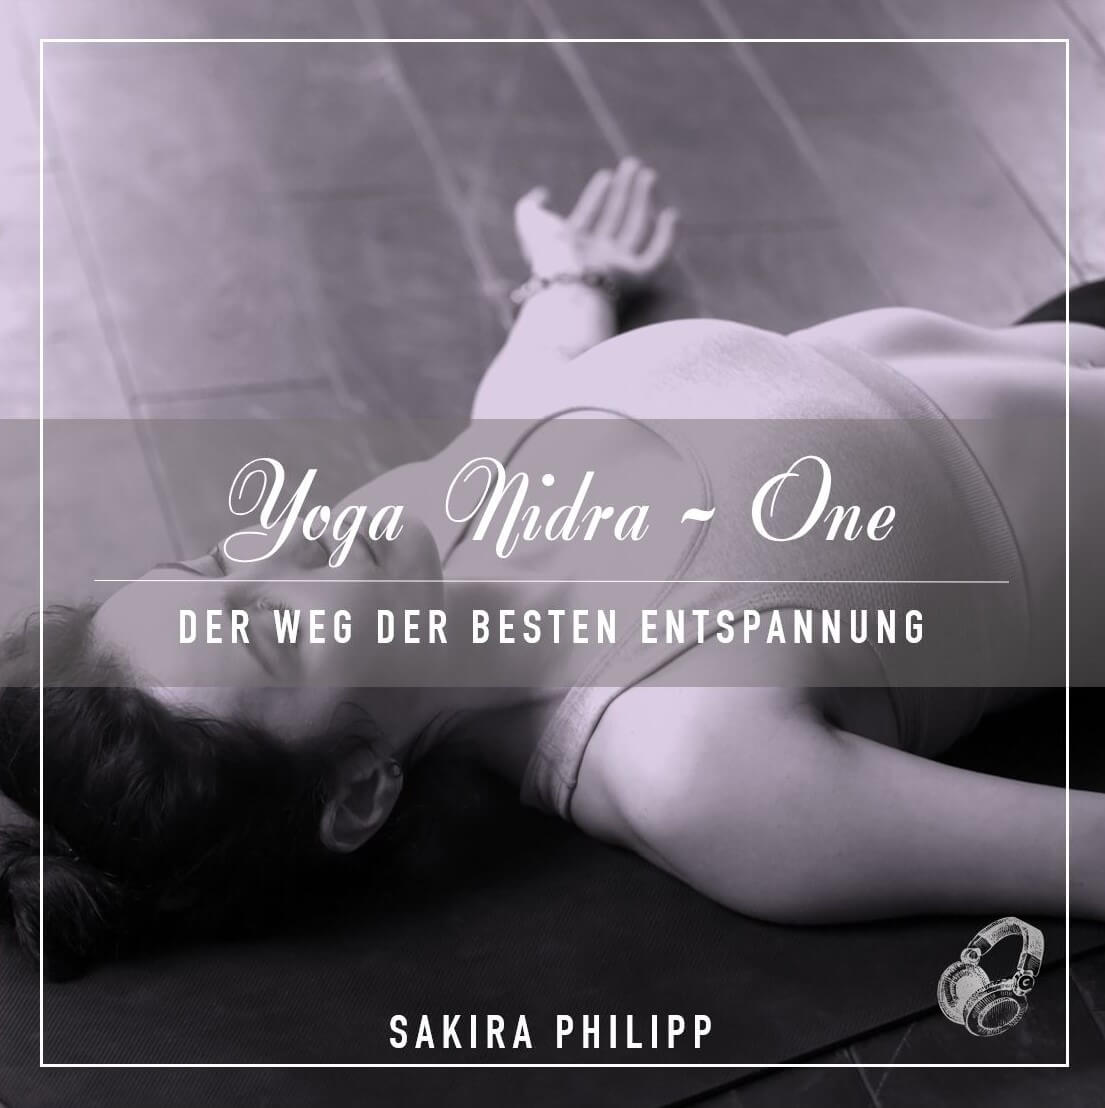 Sakira Philipp - Mindfulness - Yoga Nidra One